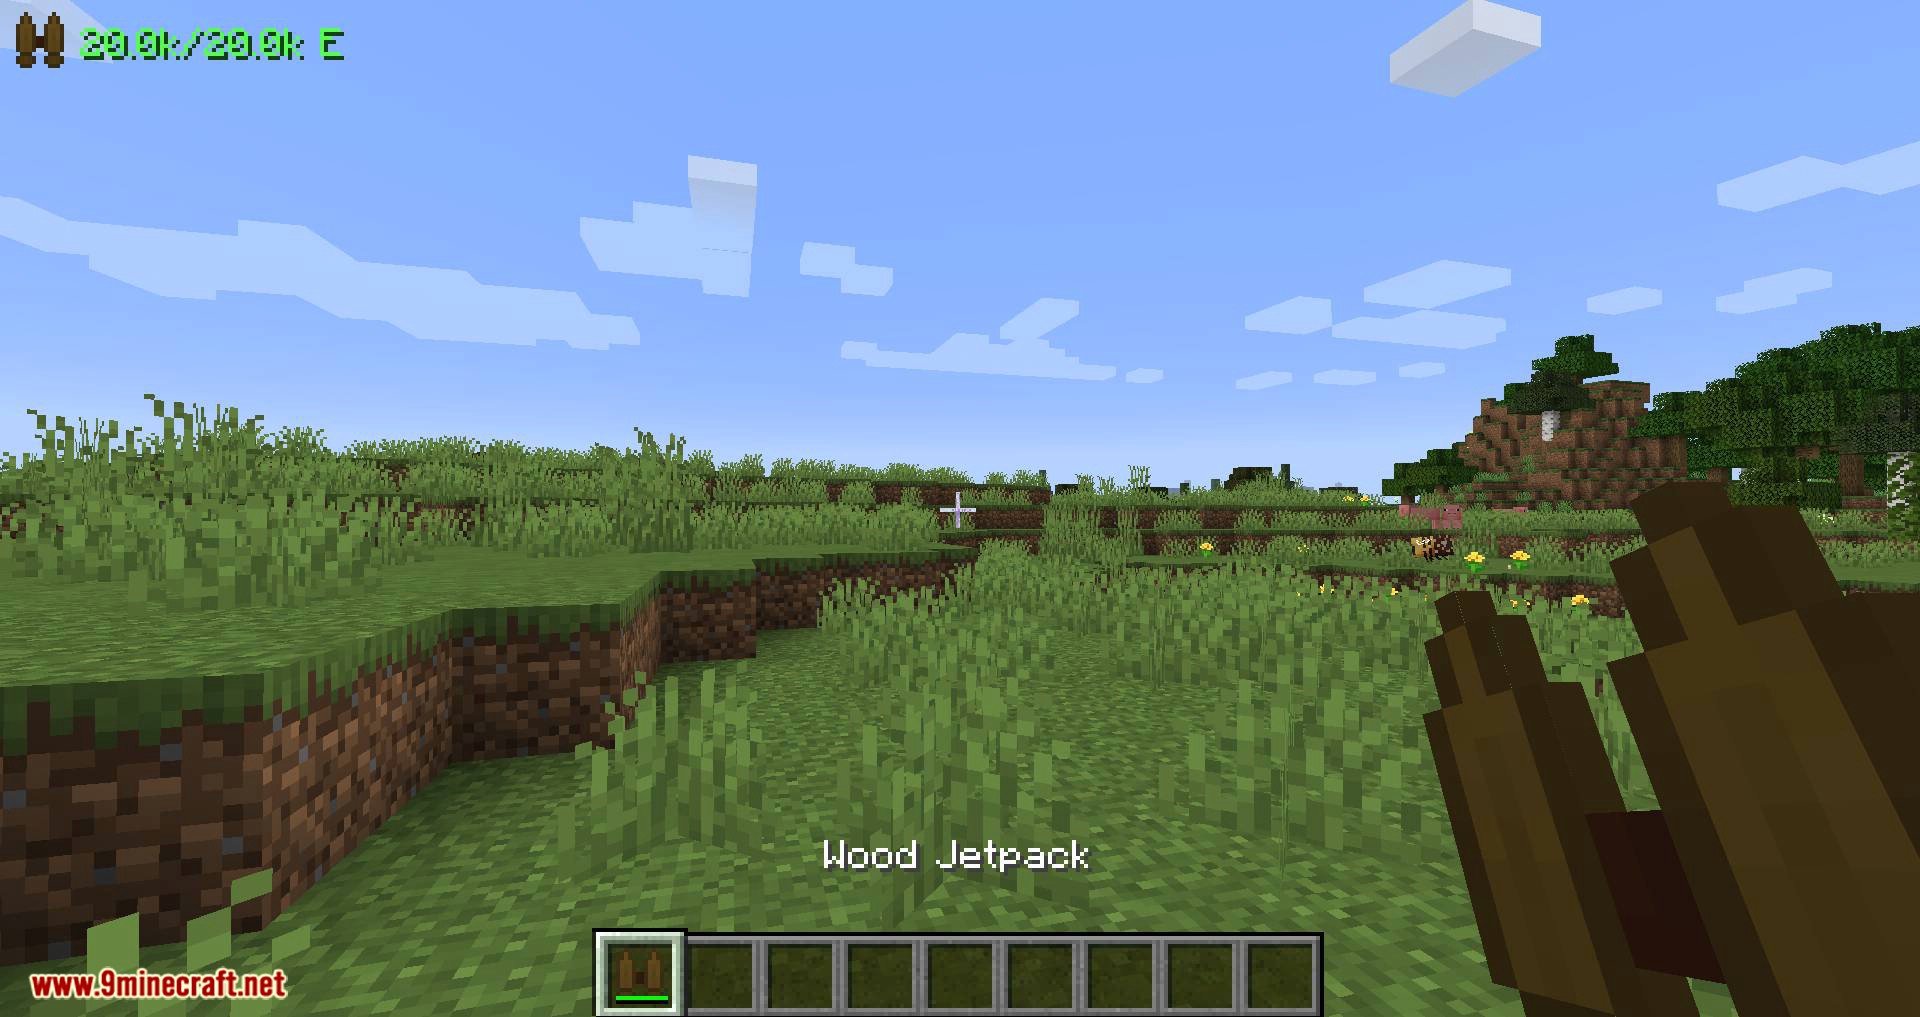 Minecraft - Iron Jetpacks Mod Showcase [Forge 1.19.4] 